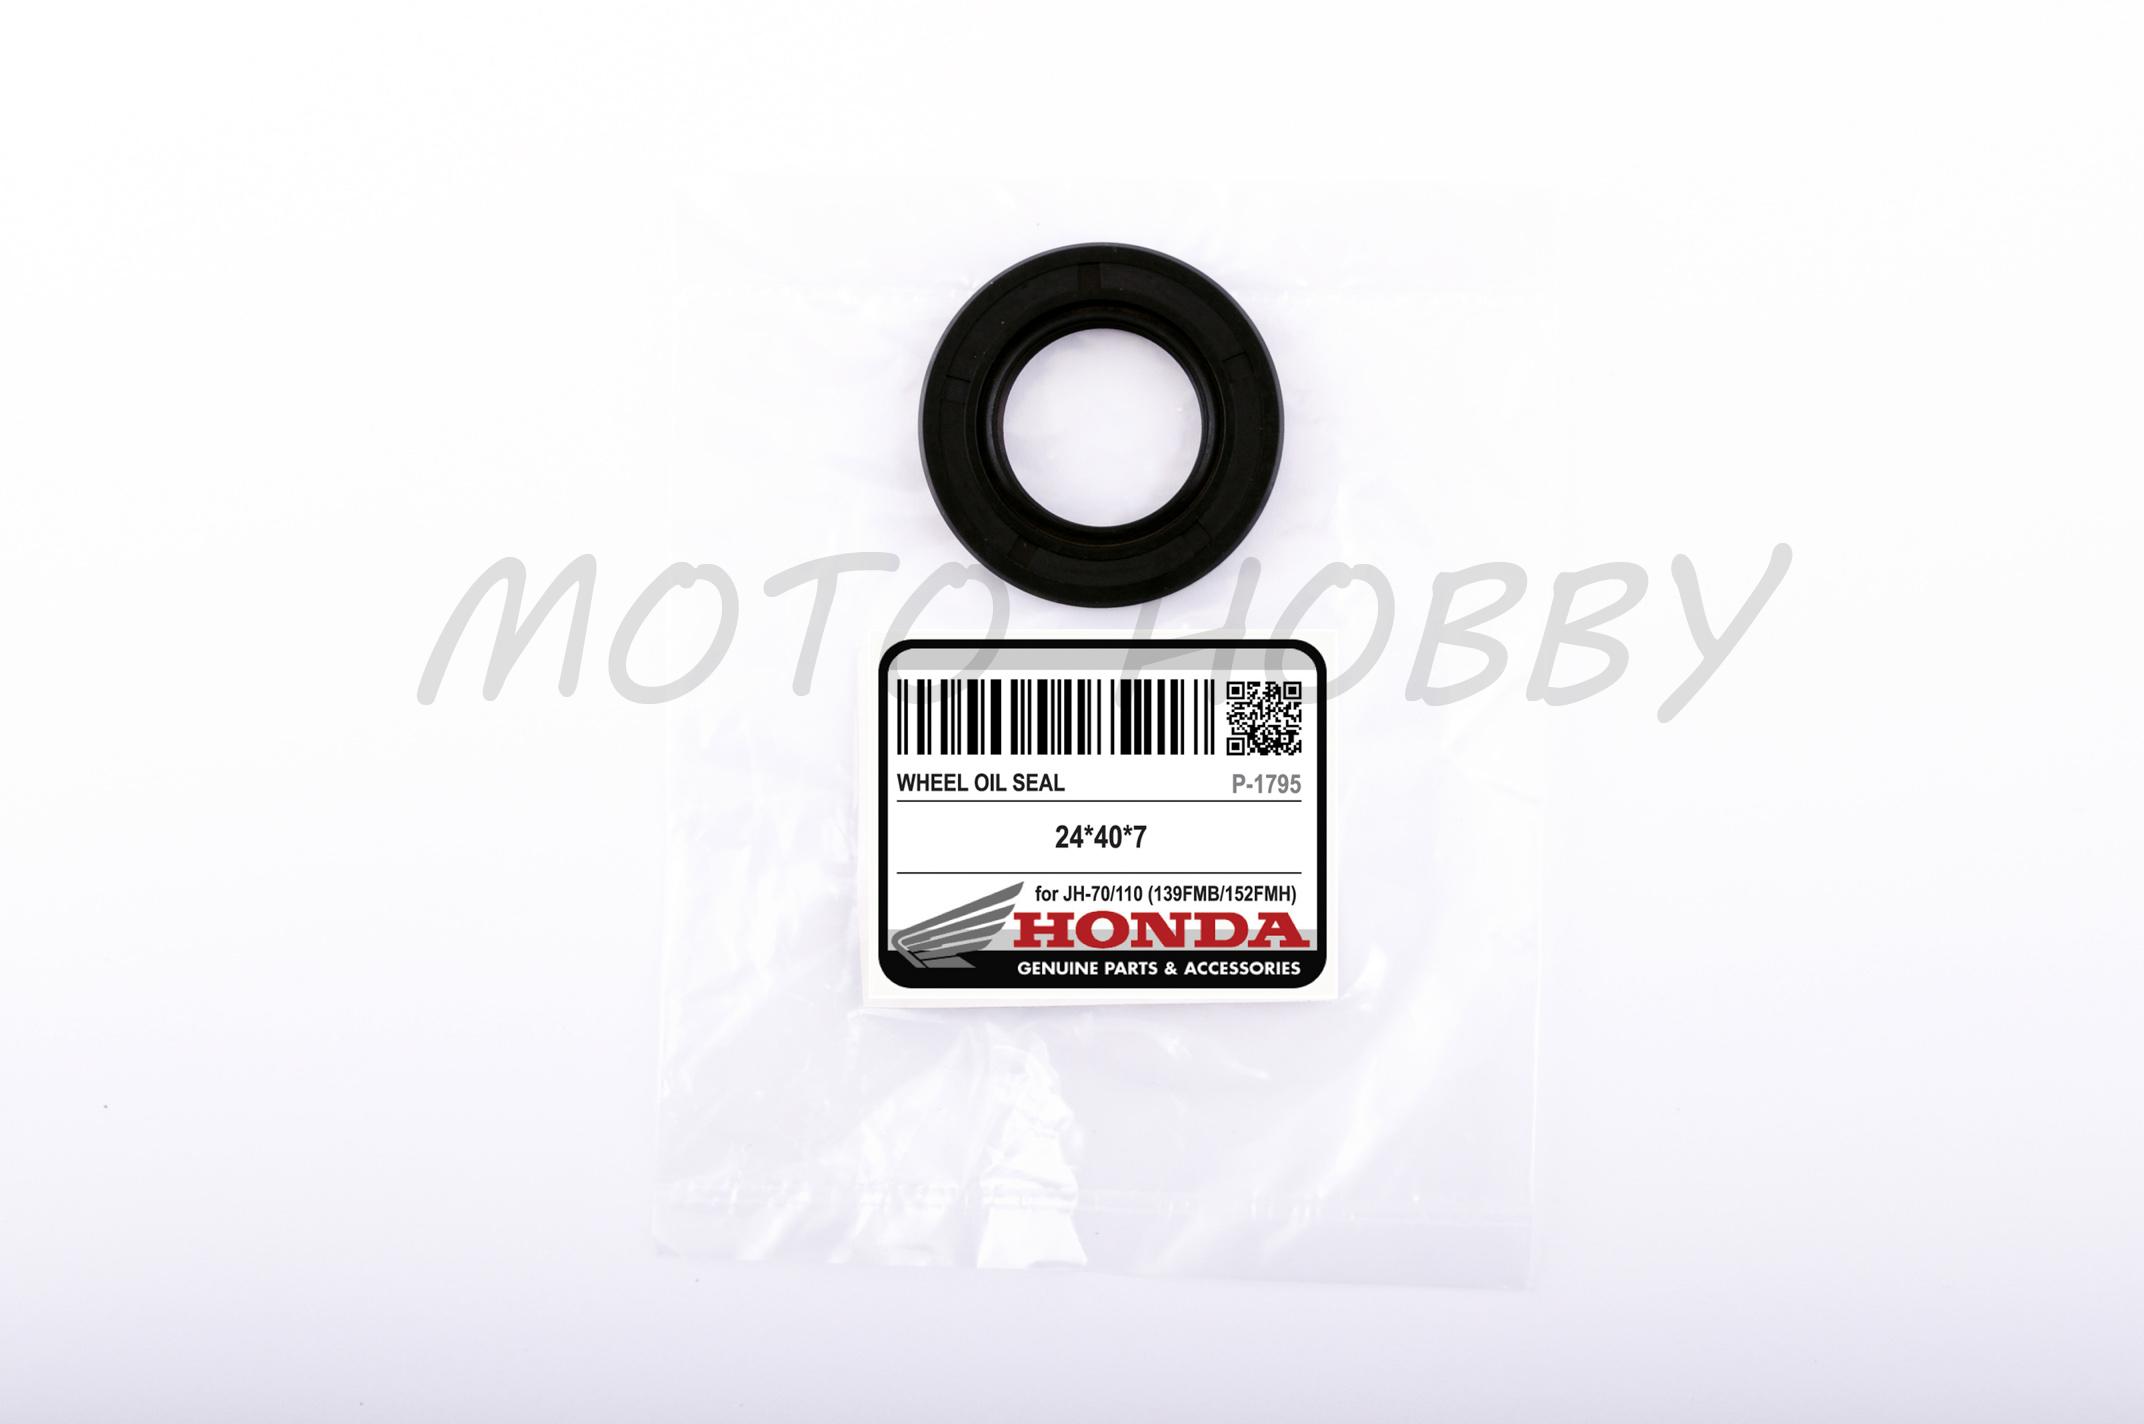     Honda DIO, TB50   (24*40*7)   HND P-1795